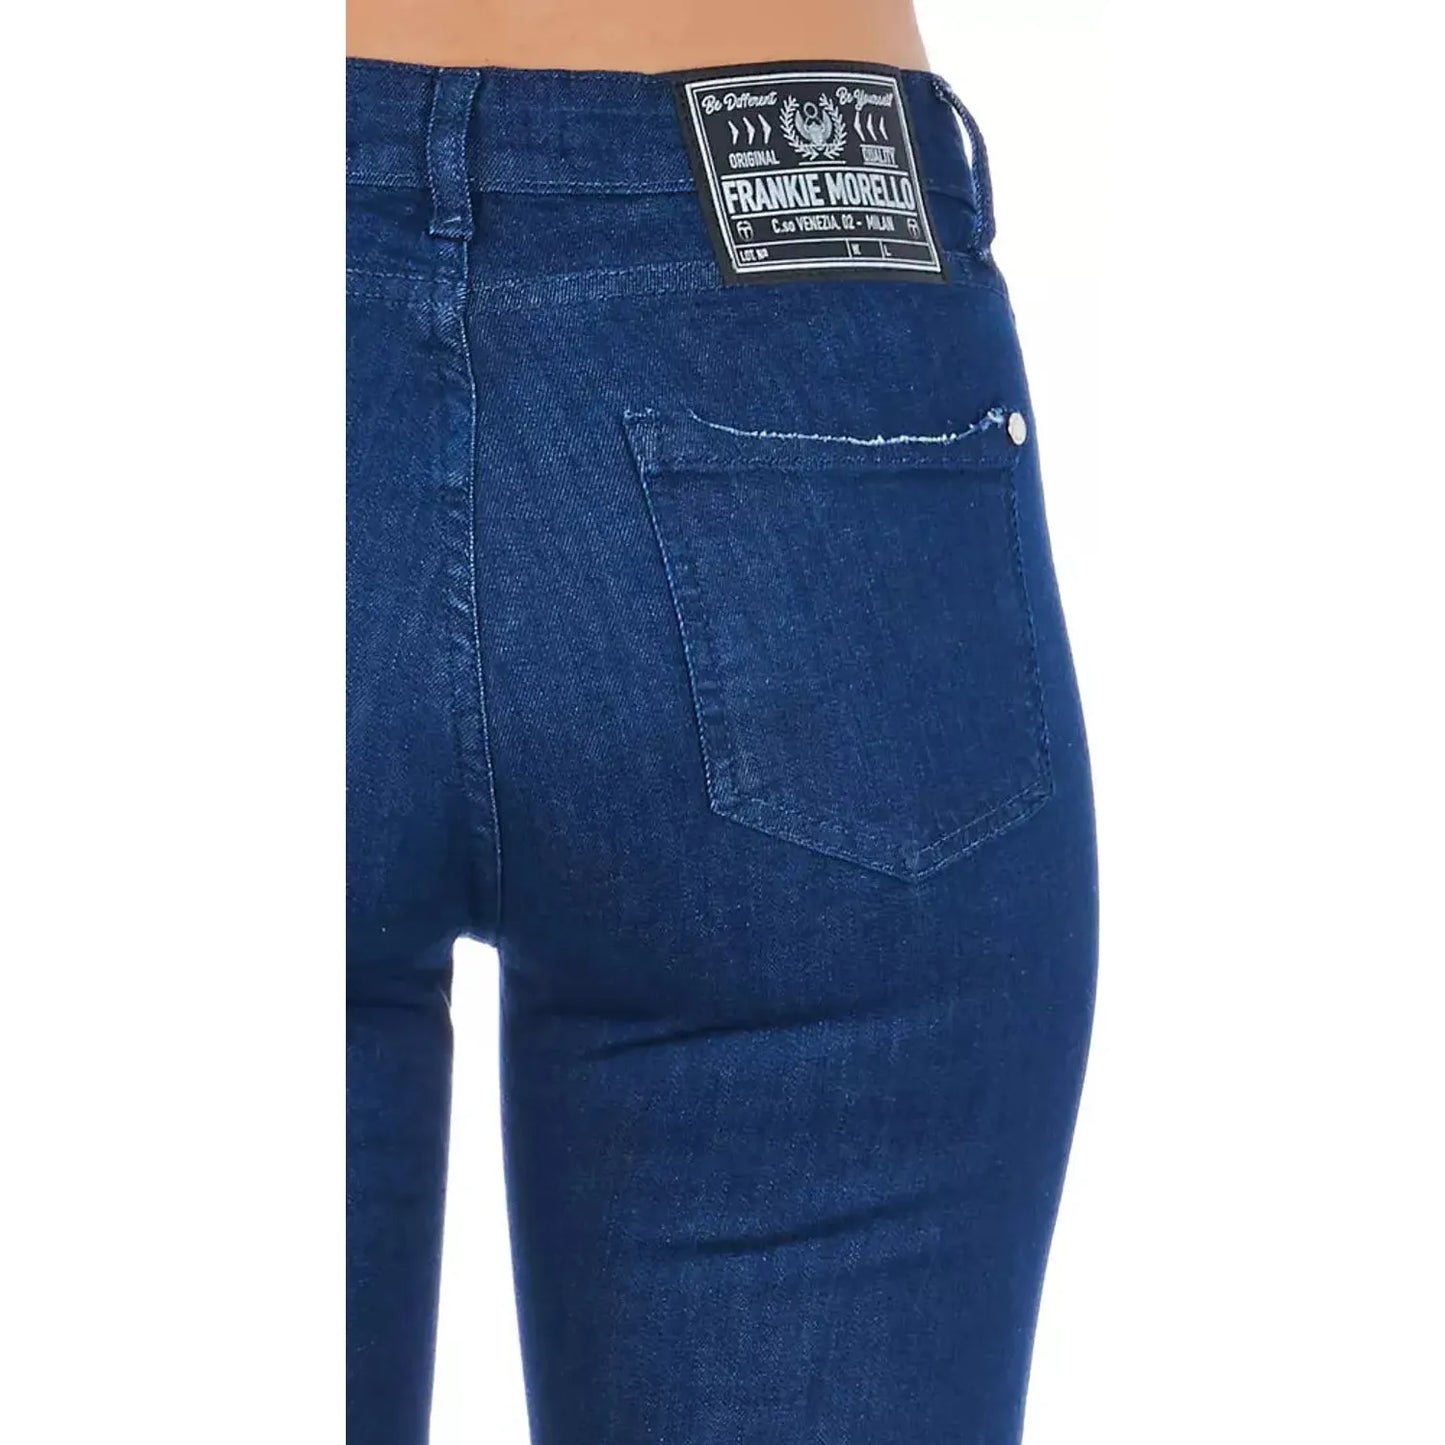 Frankie Morello Chic Multi-Pocket Skinny Denim blue-cotton-jeans-pant-50 stock_product_image_21769_886432-23-d915ab2f-f5b.webp